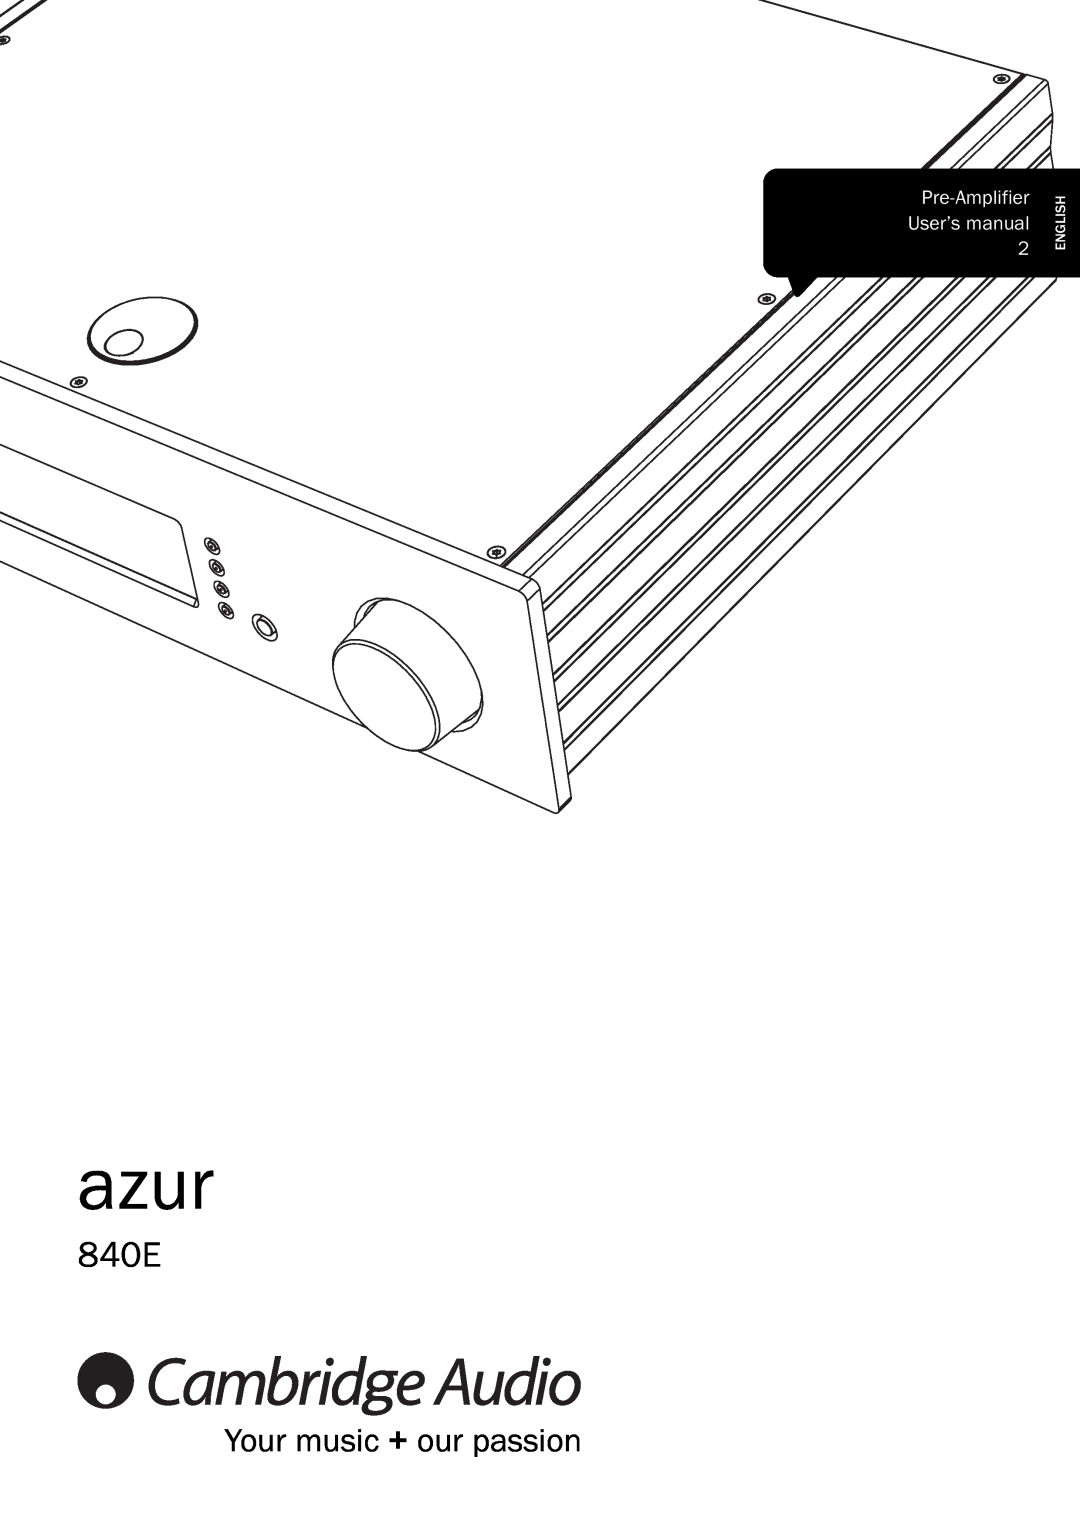 Cambridge Audio Azur 840E user manual azur, Your music + our passion, English 